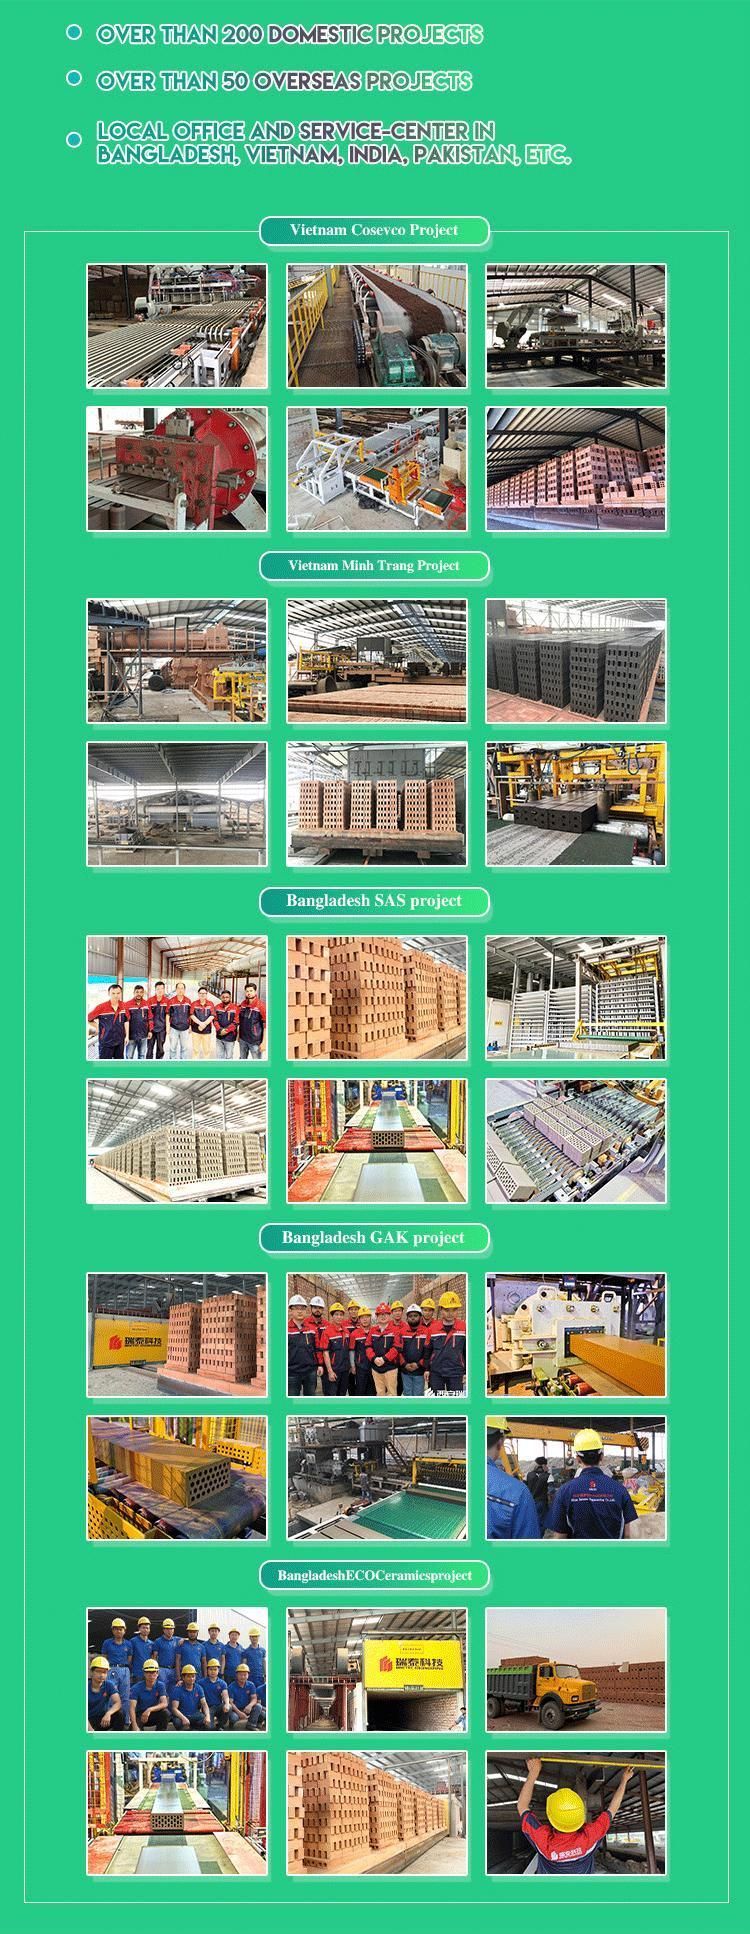 Best Price Clay Bricks Extruder Building Materials Bricks Making Machinery